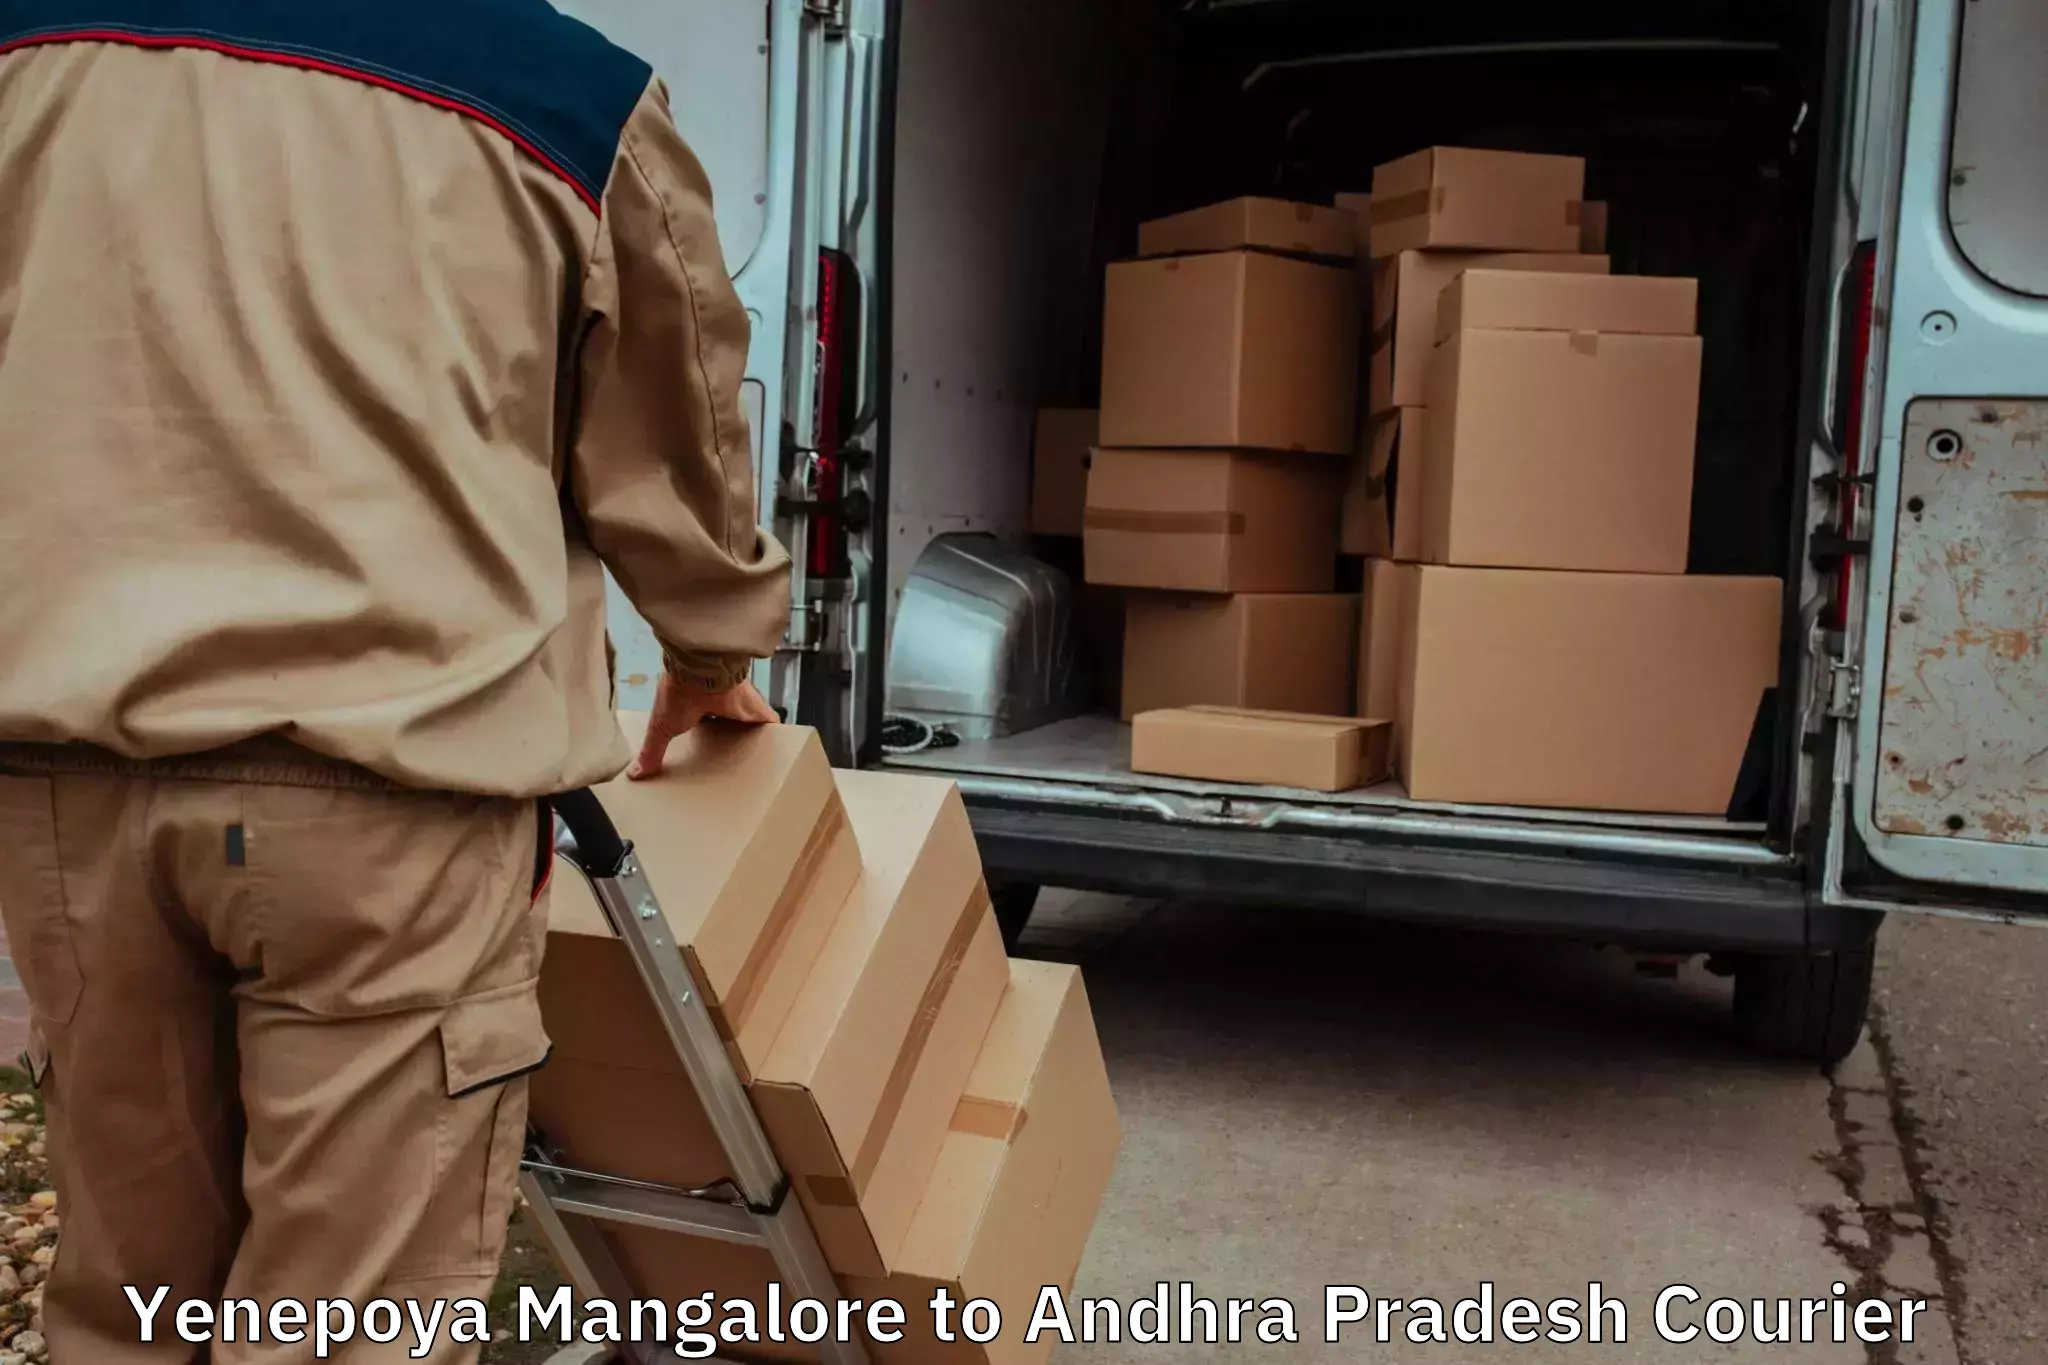 Furniture relocation experts Yenepoya Mangalore to Changaroth